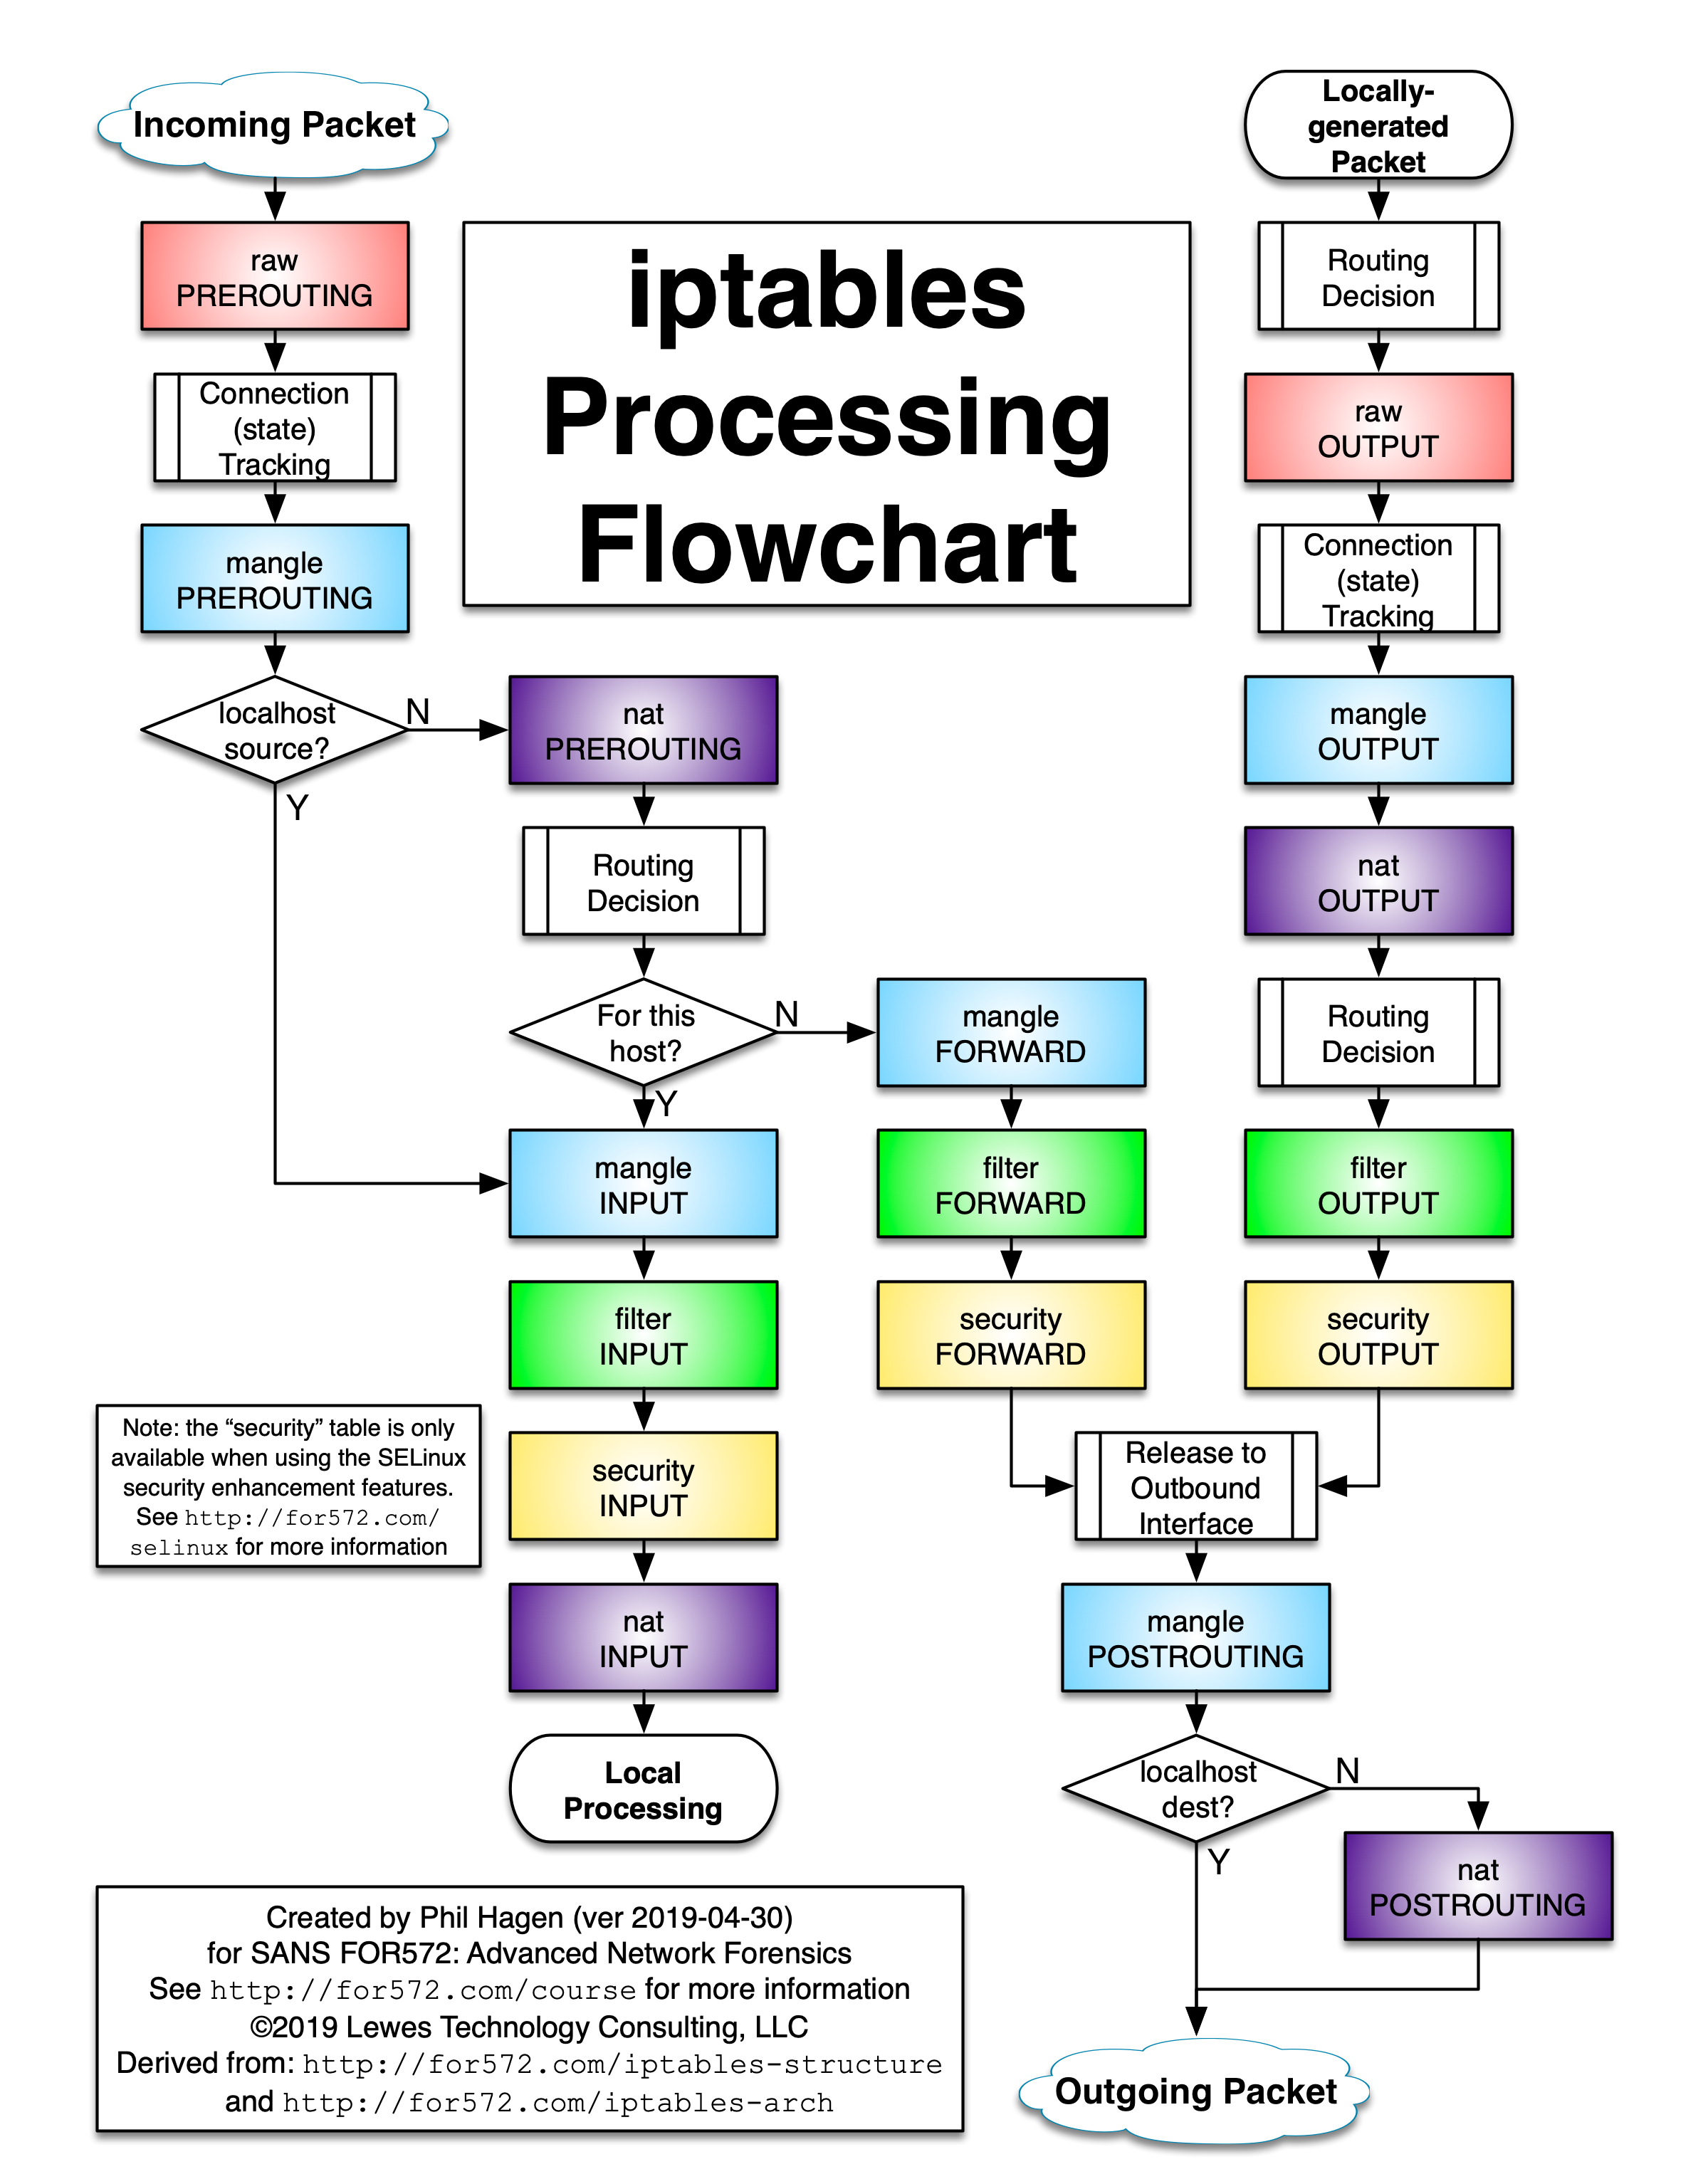 FW-IDS-iptables-Flowchart-v2019-04-30-1.png